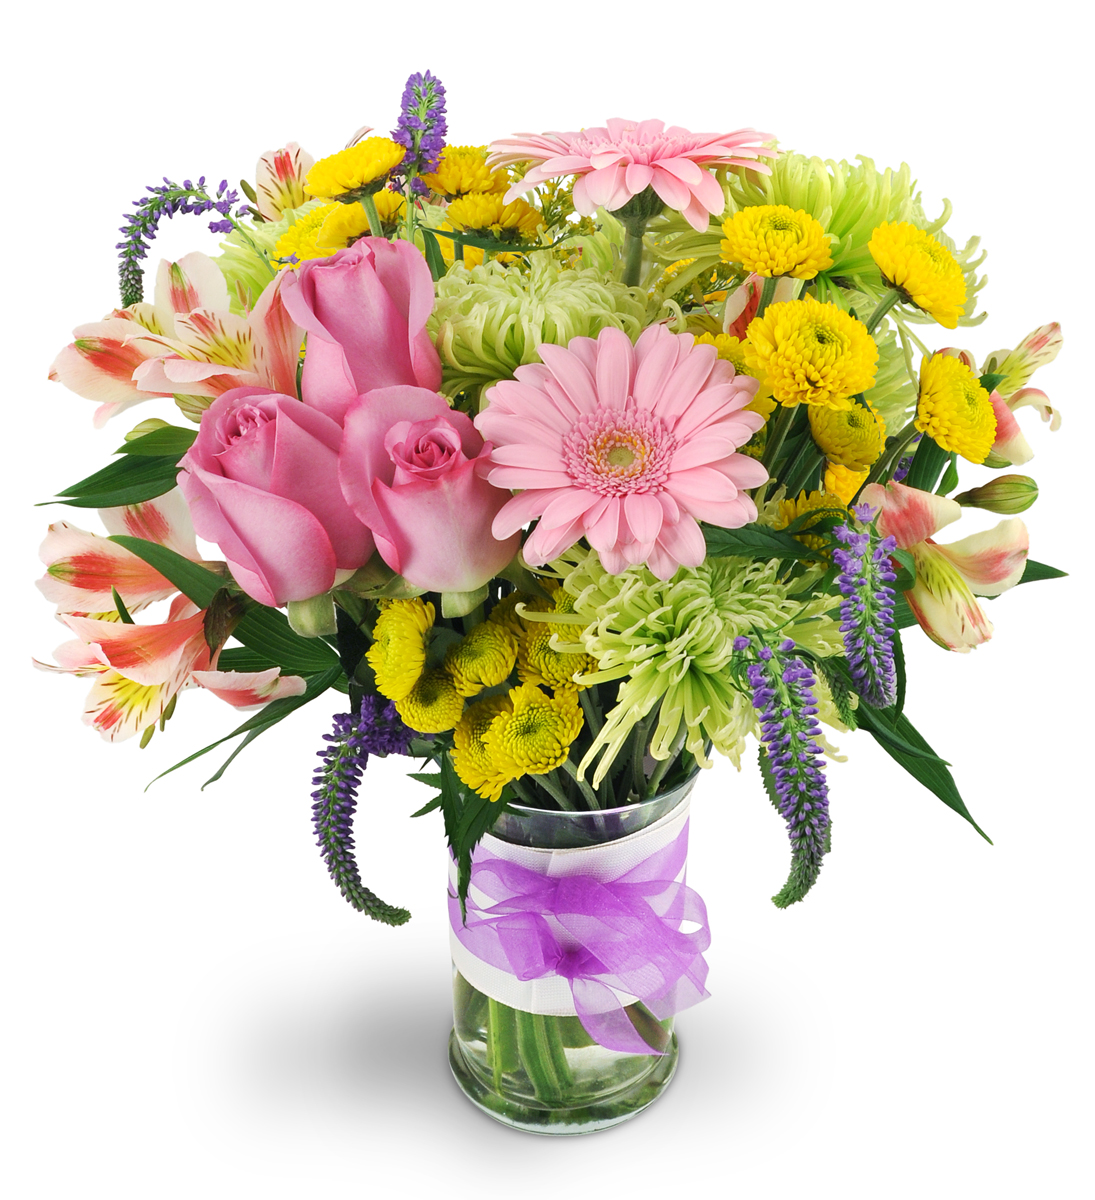 Joyful Thanks - Send Flowers to Maple, ON Today!